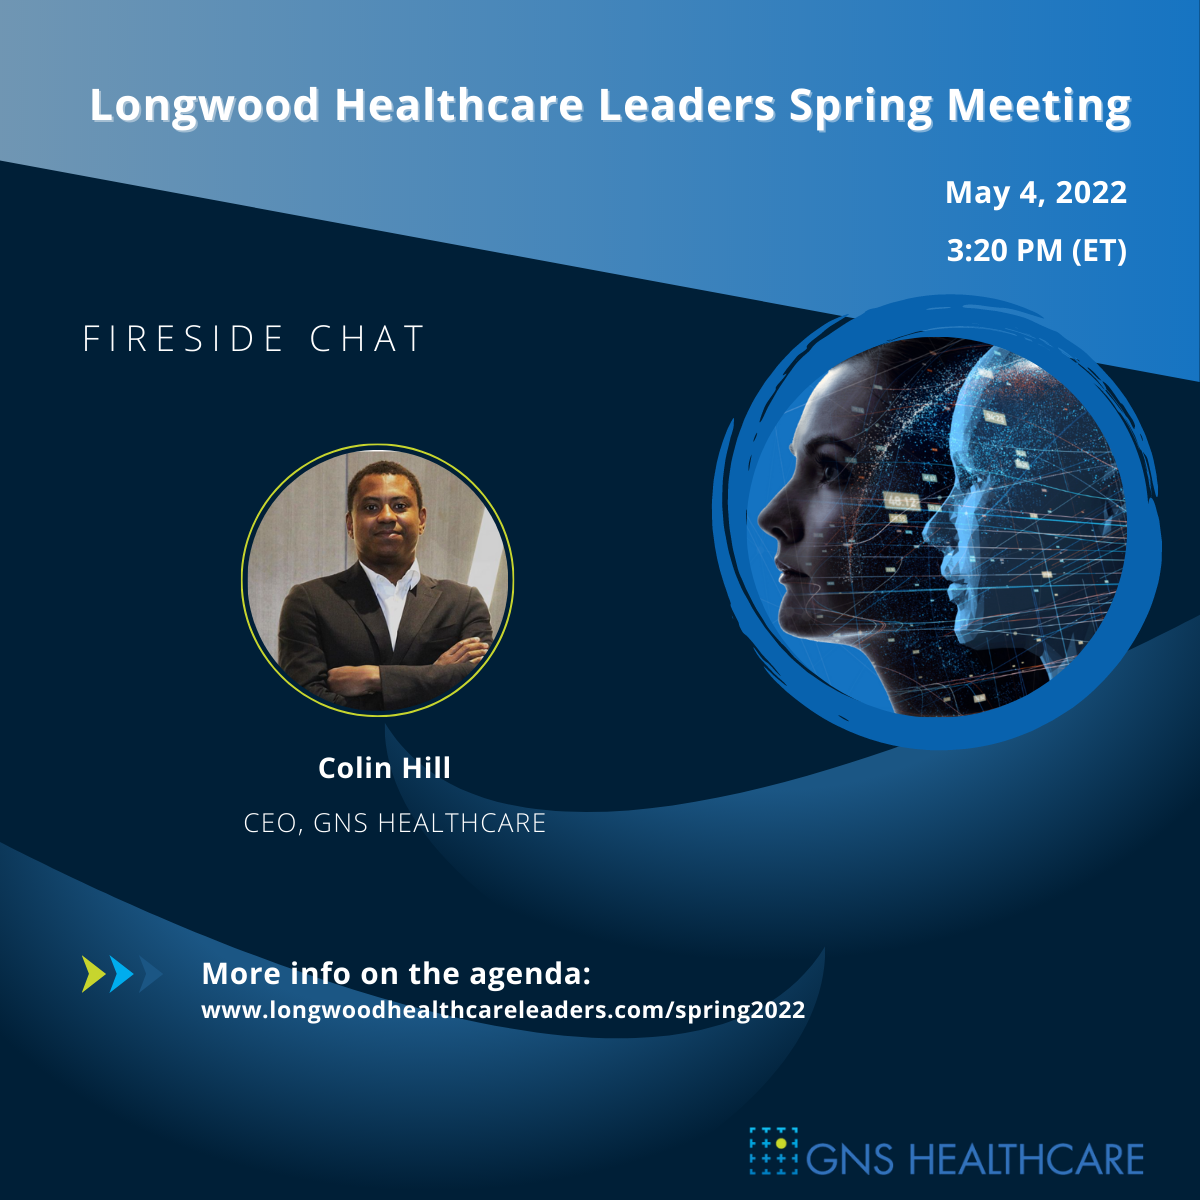 Fireside chat at Longwood Healthcare Leaders meeting